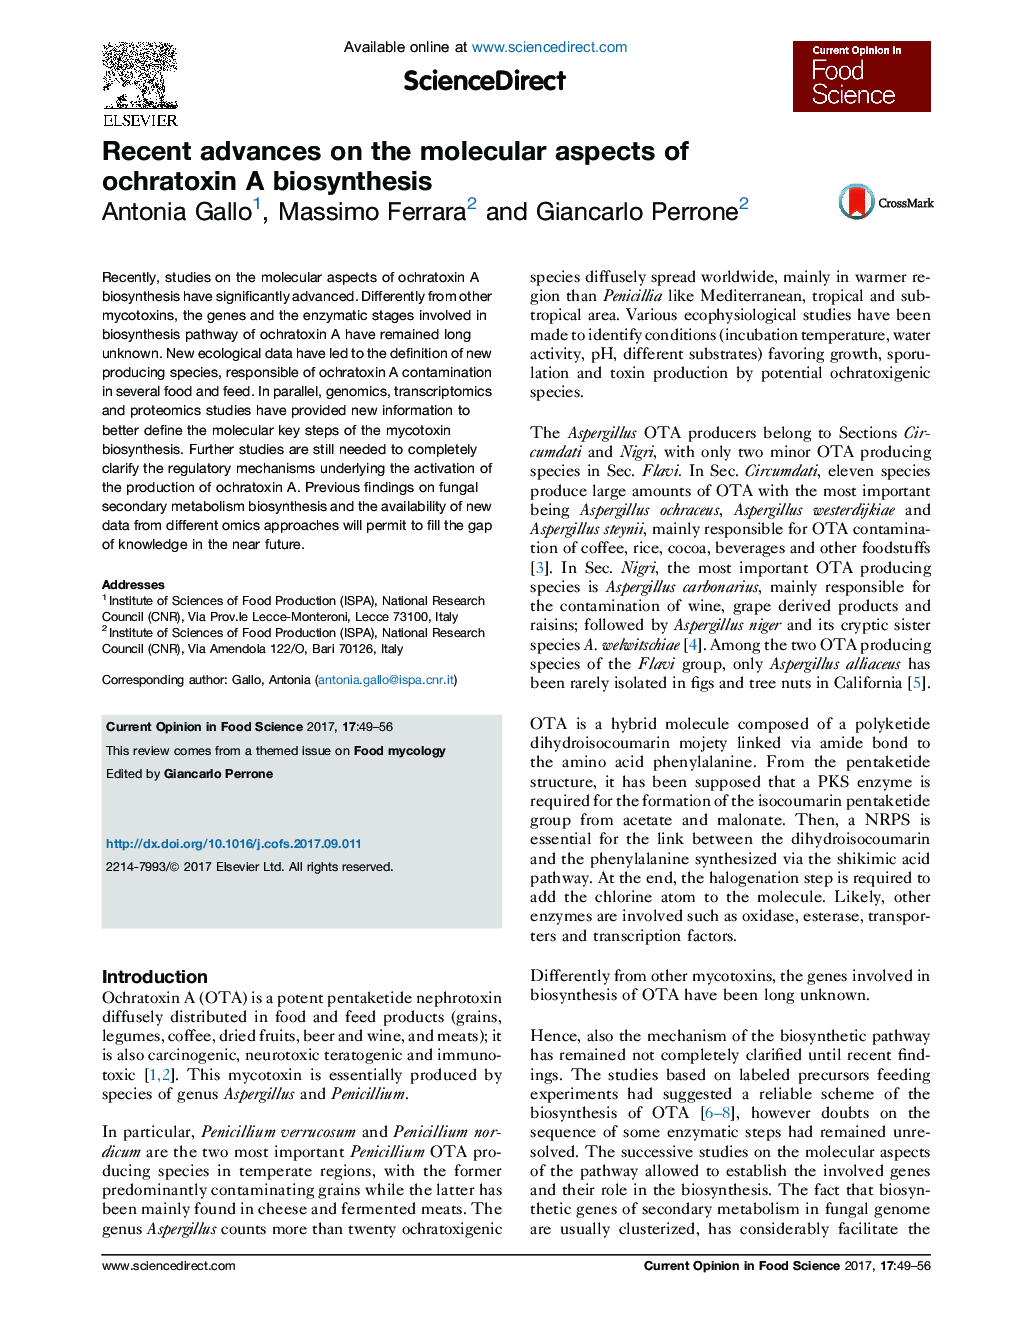 Recent advances on the molecular aspects of ochratoxin A biosynthesis